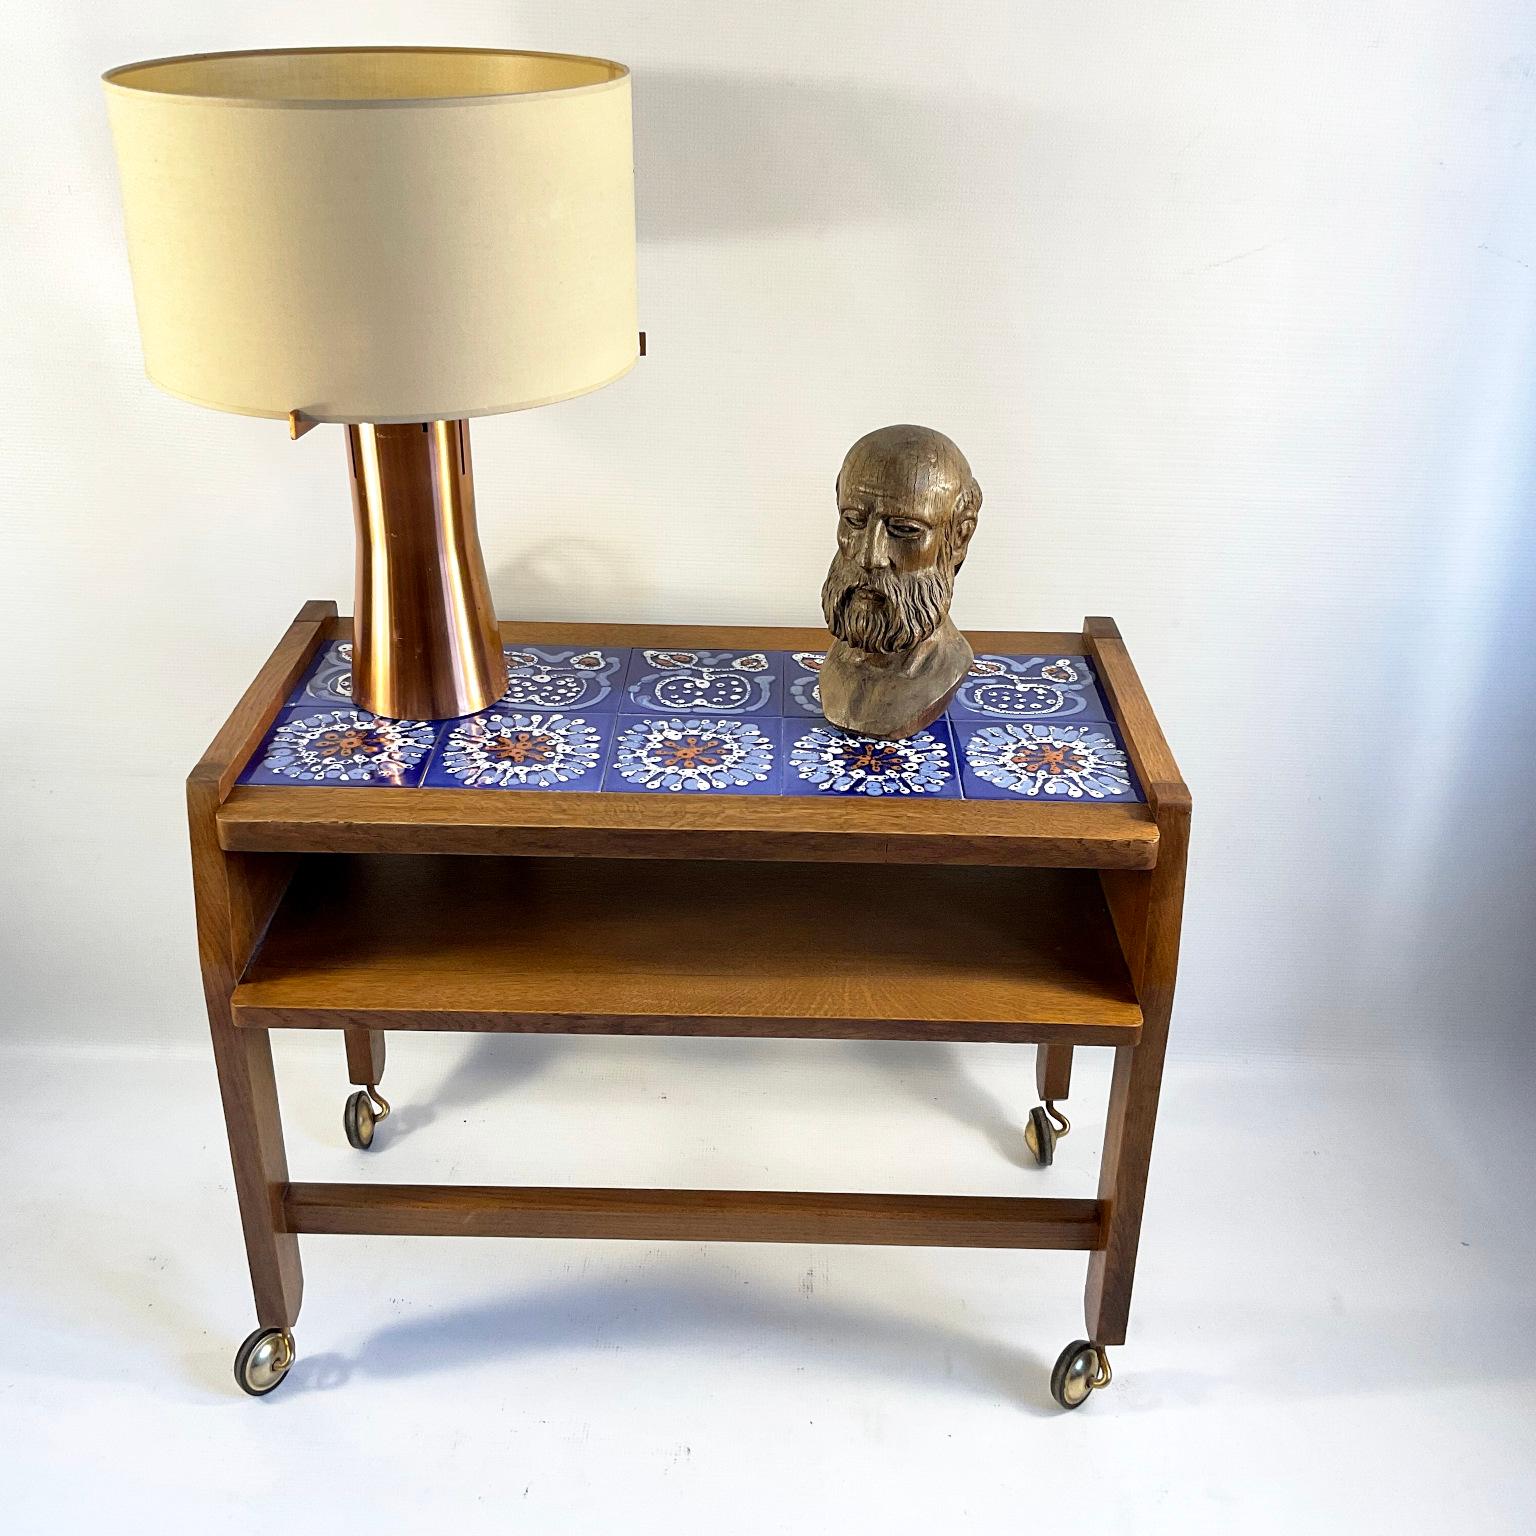 1960s Guillerme et Chambron Oak Side Table with Blue Ceramics Tiles Top For Sale 2